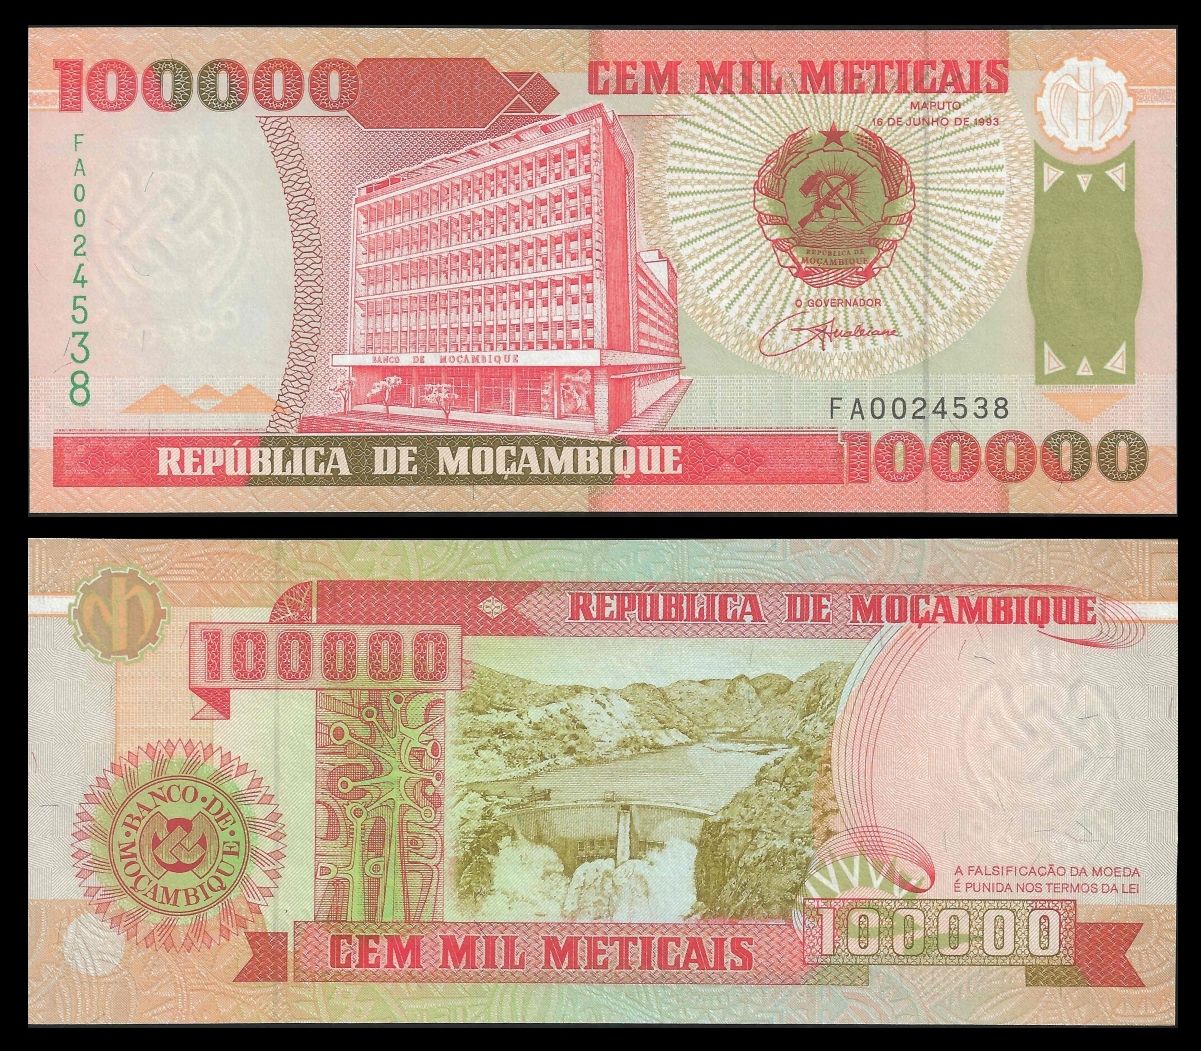 Mozambic 1993 - 100.000 meticais UNC